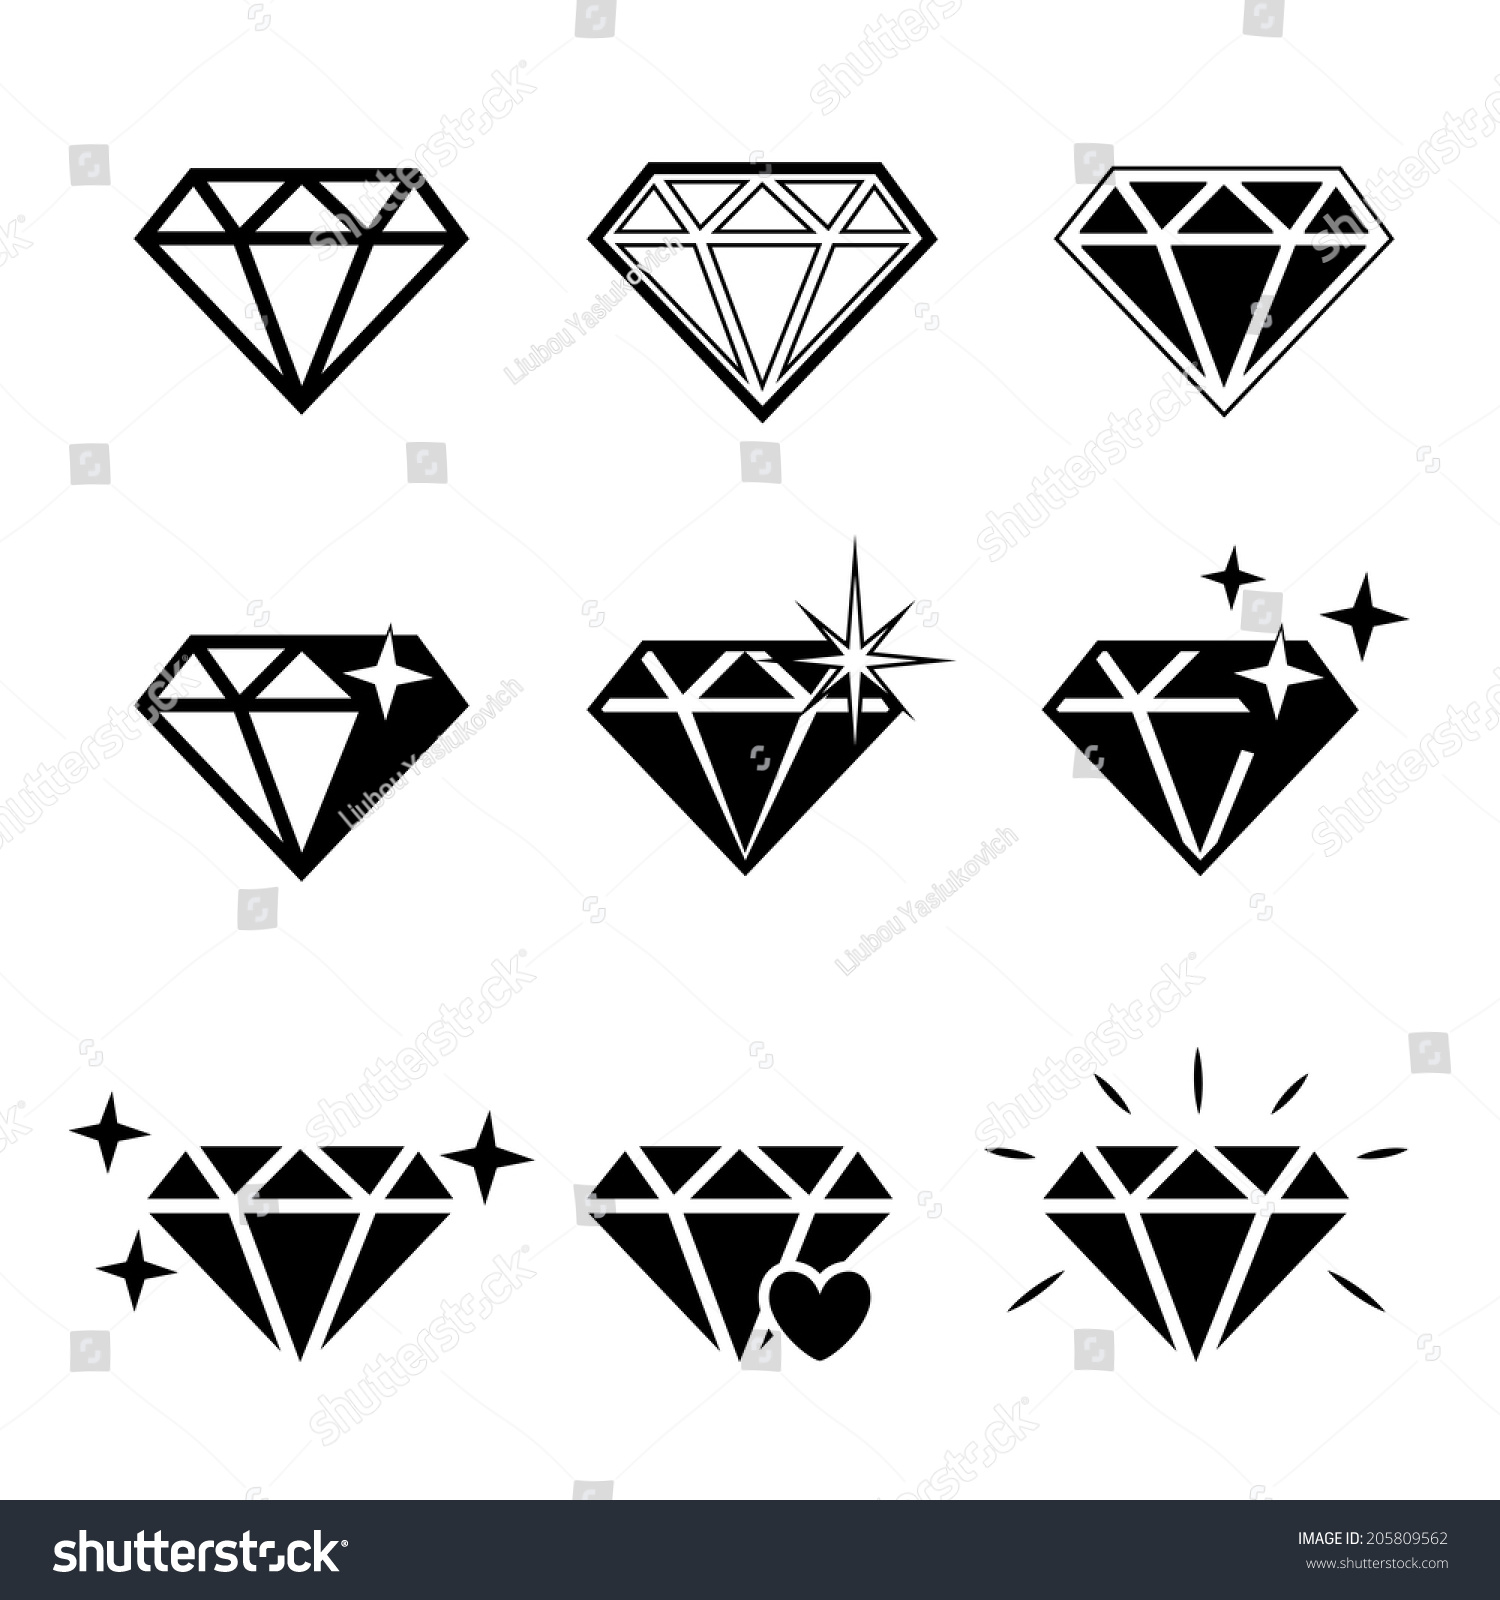 diamond clipart vector free - photo #49